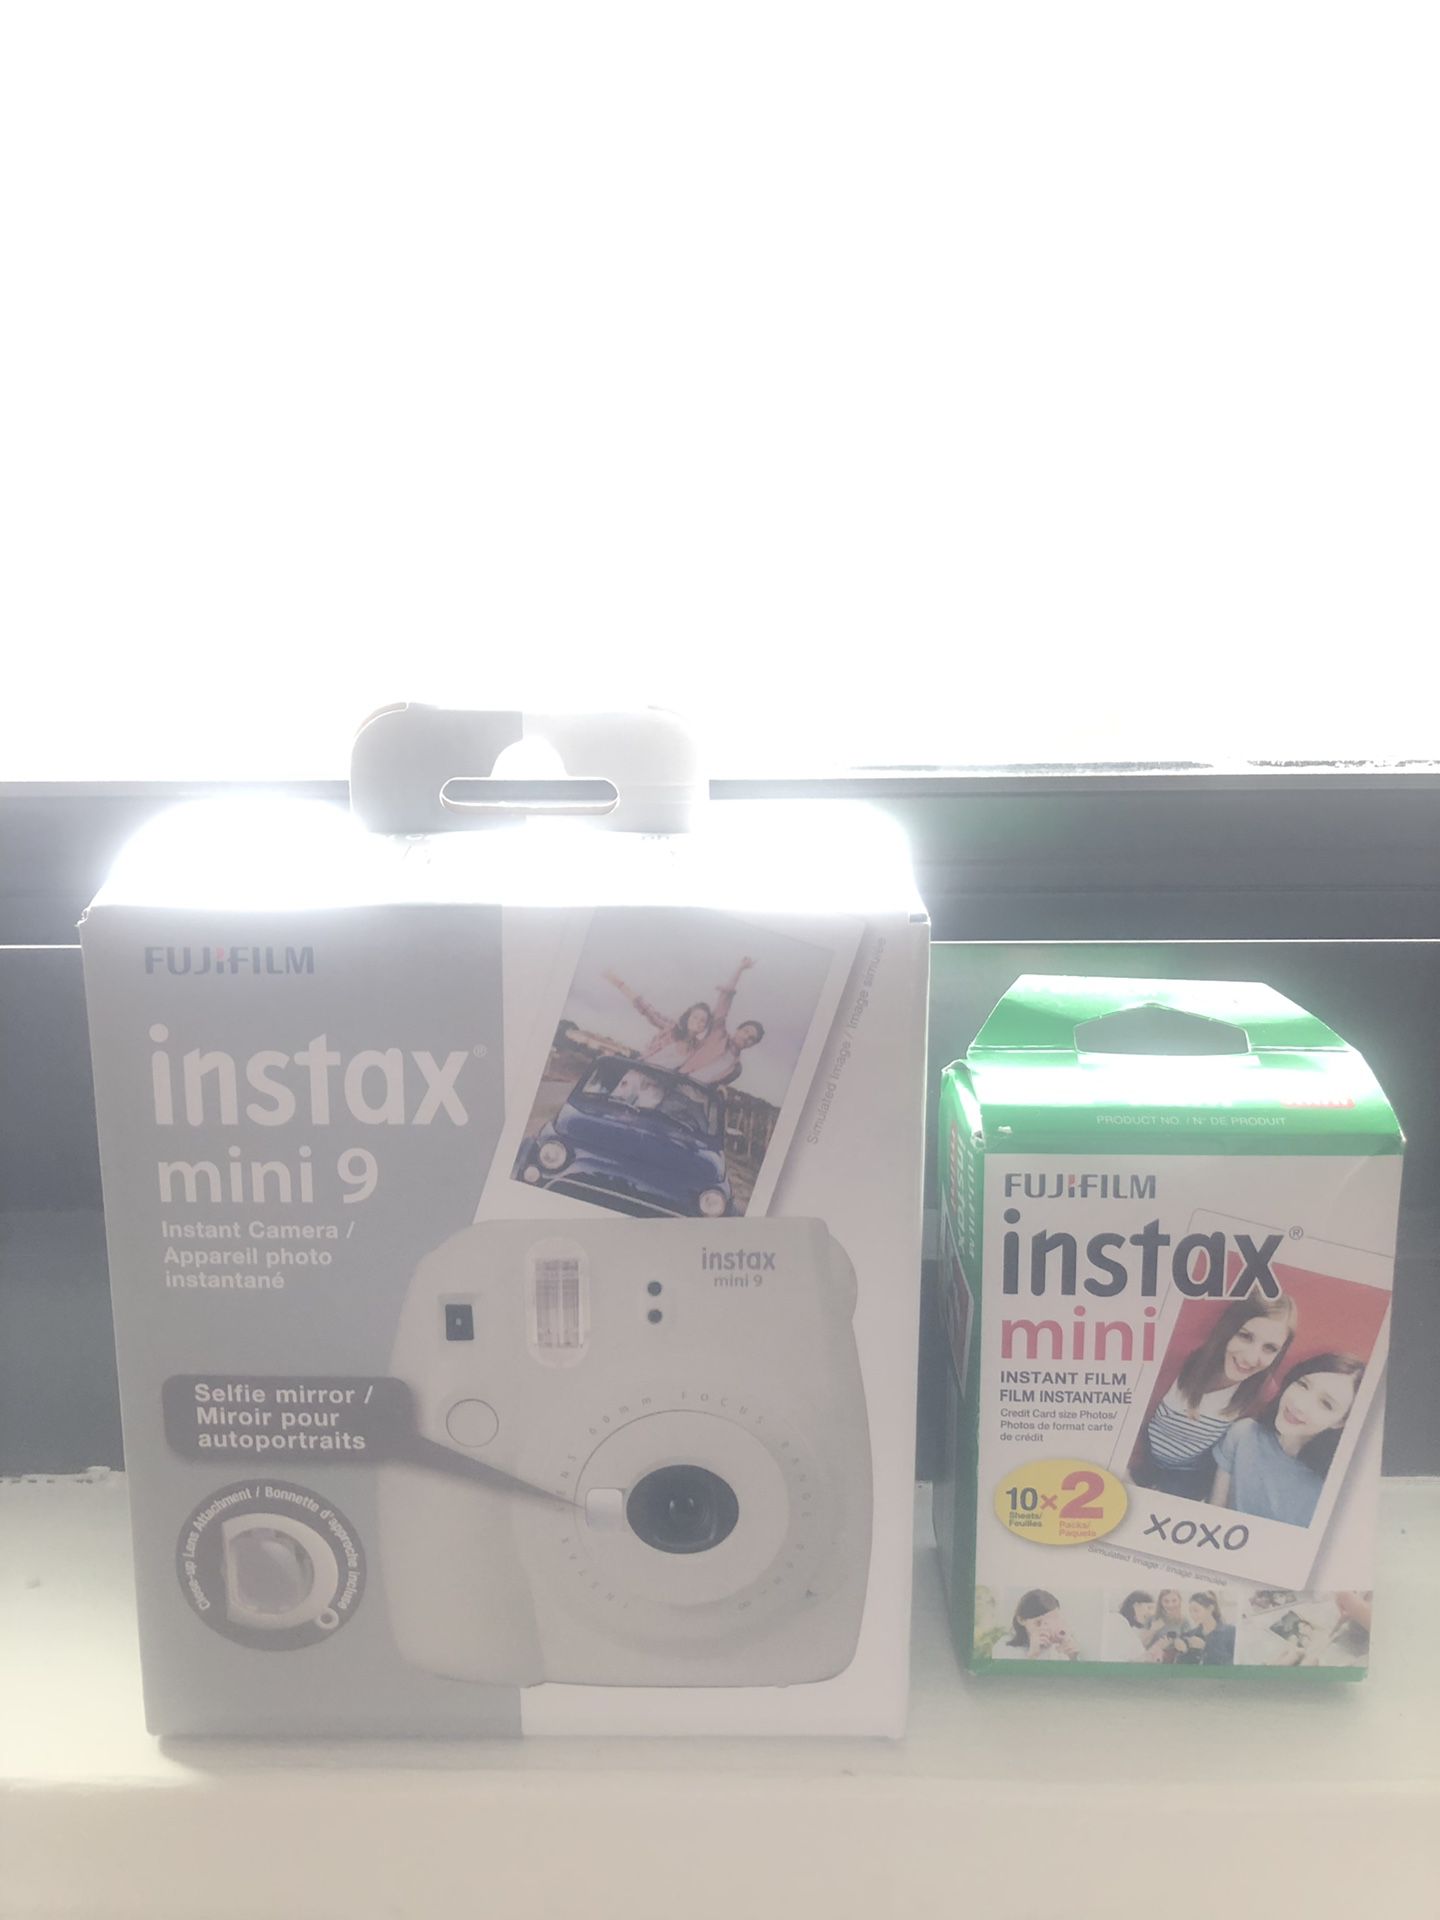 Instax mini 9 Polaroid camera with film